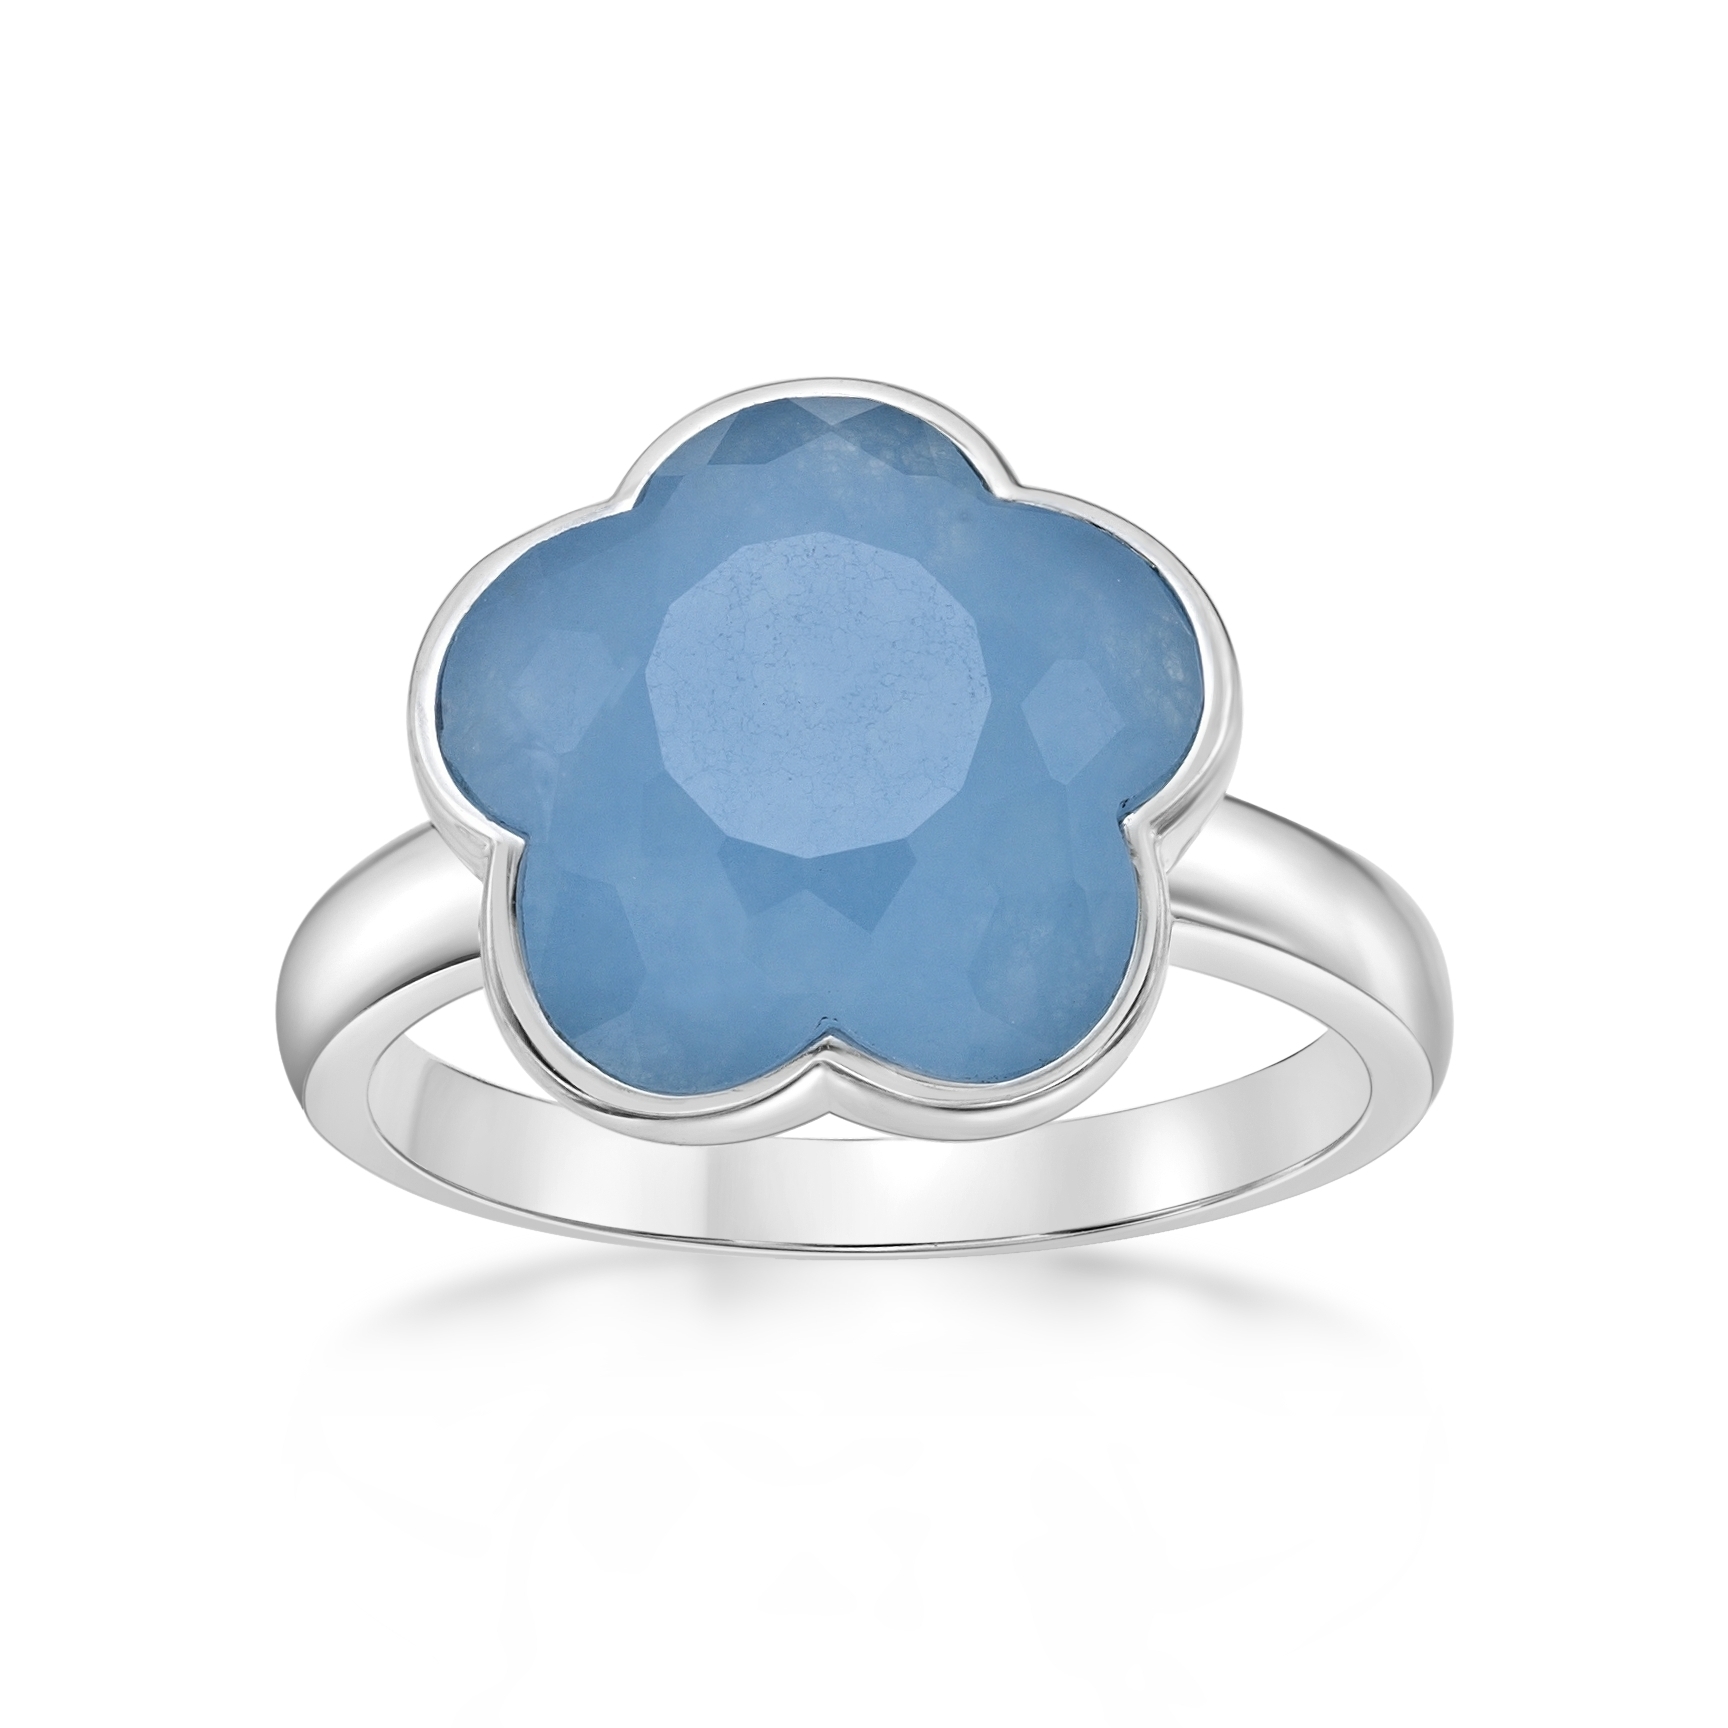 Lavari Jewelers Women’s Blue Quartz Five Petal Flower Ring, 925 Sterling Silver, Size 7